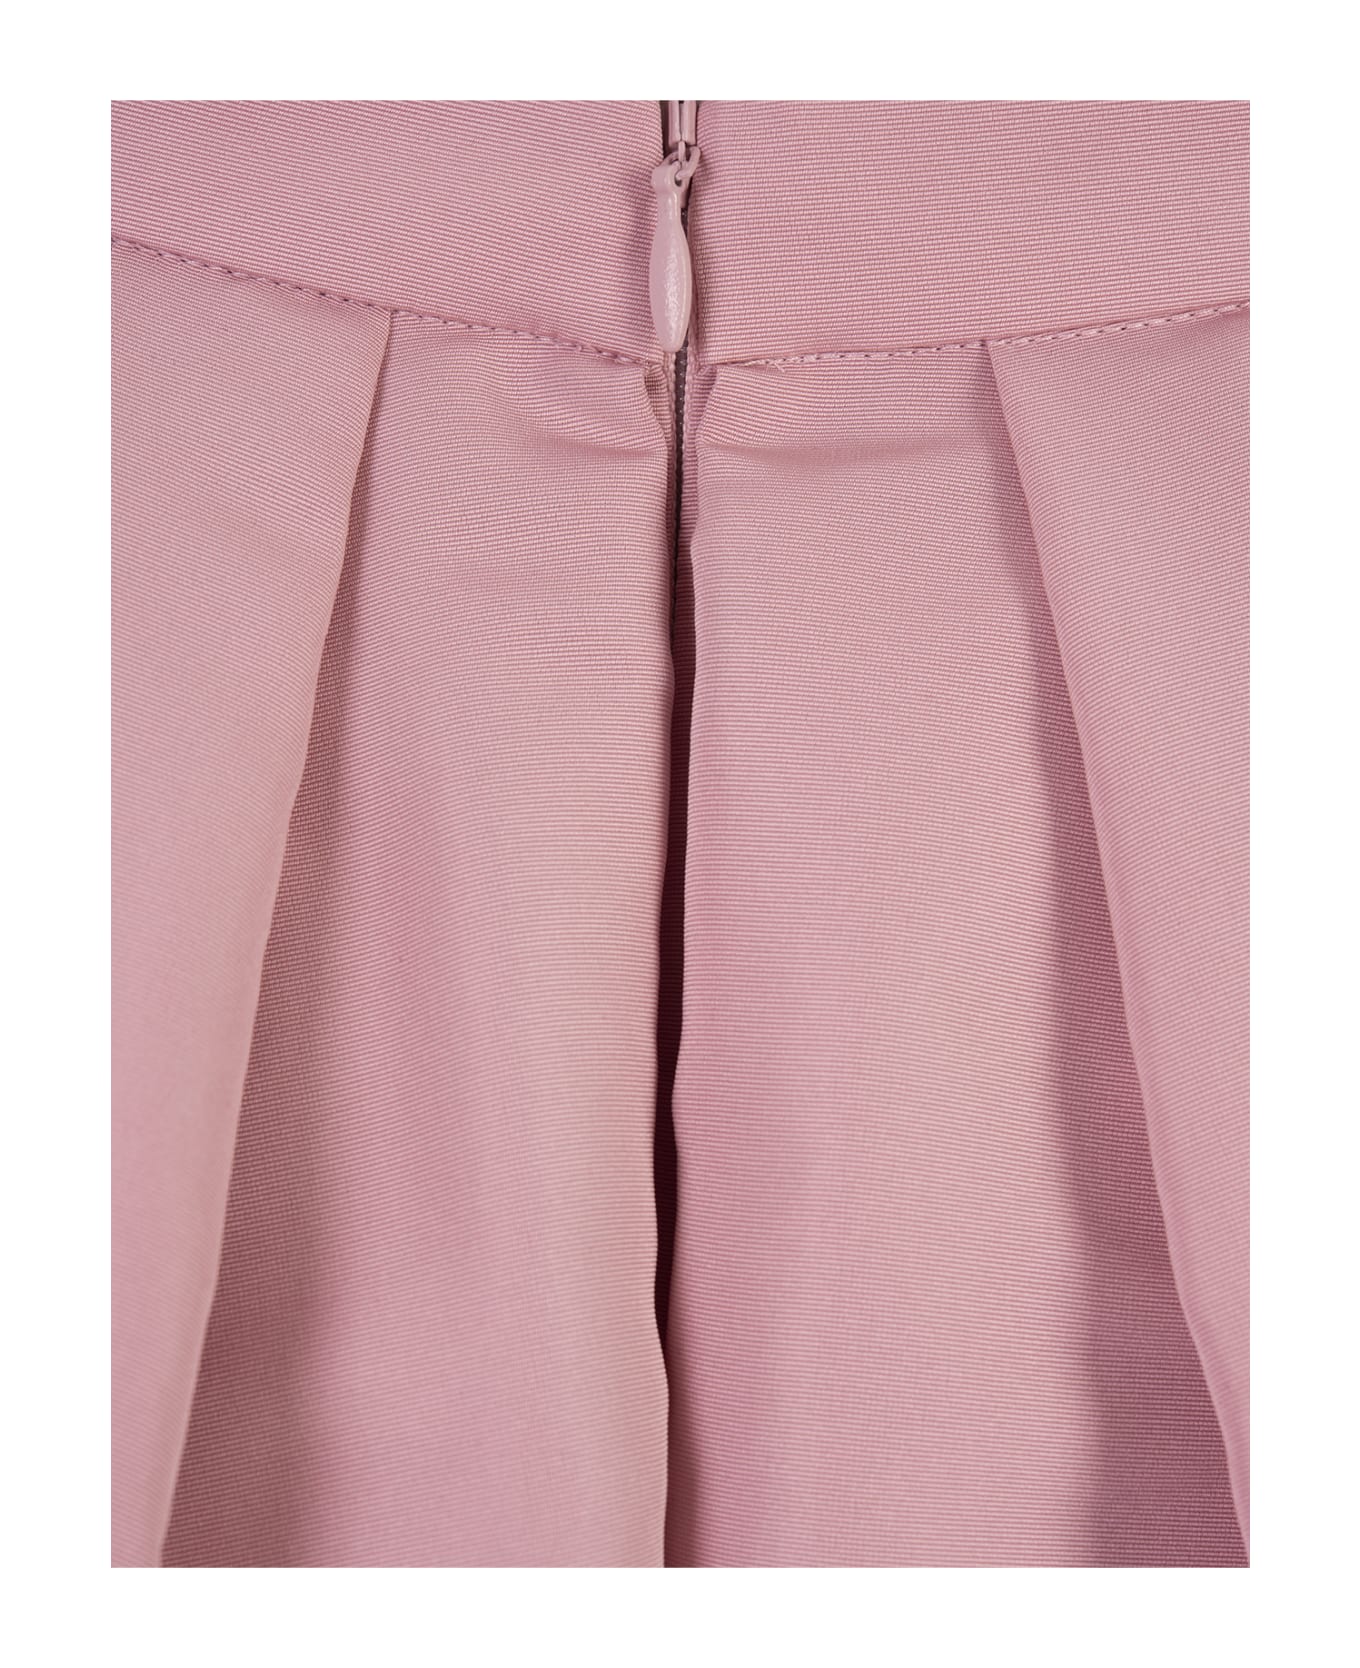 Alexander McQueen Light Pink Curled Midi Skirt - Pink